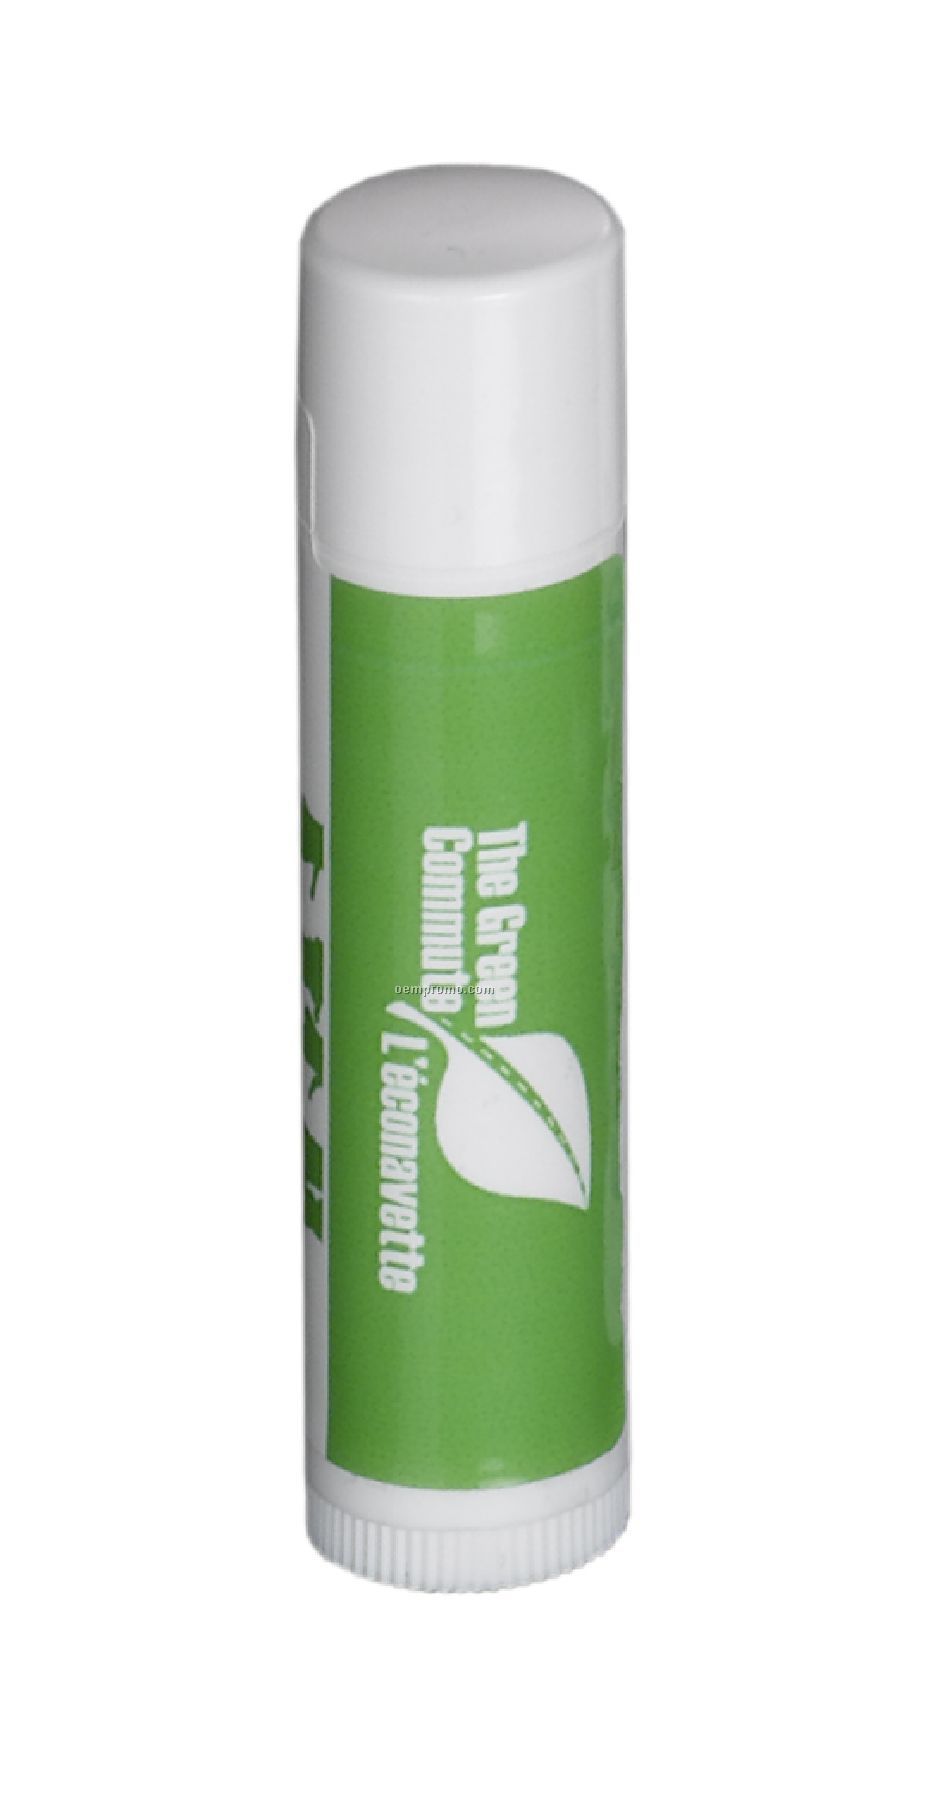 Organic Lip Balm In White Tube